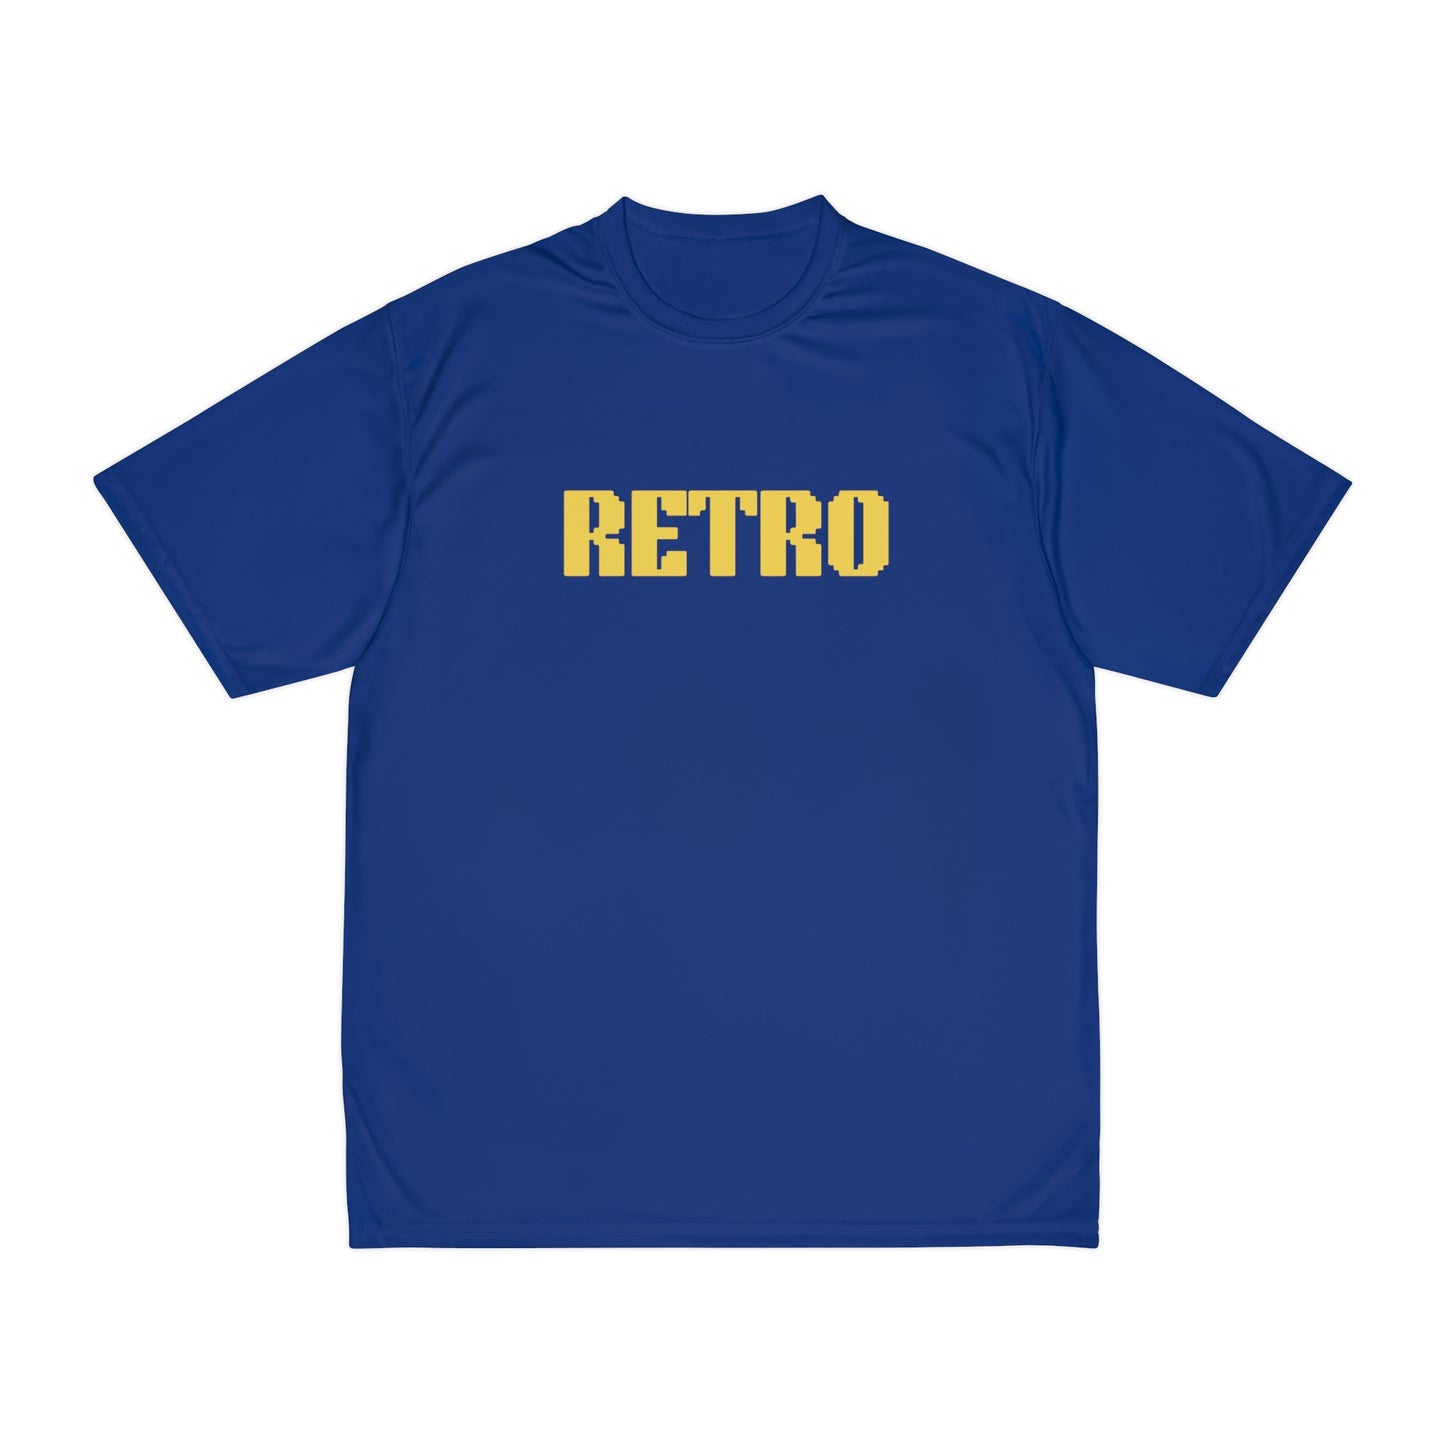 RETRO - Men's Performance T-Shirt